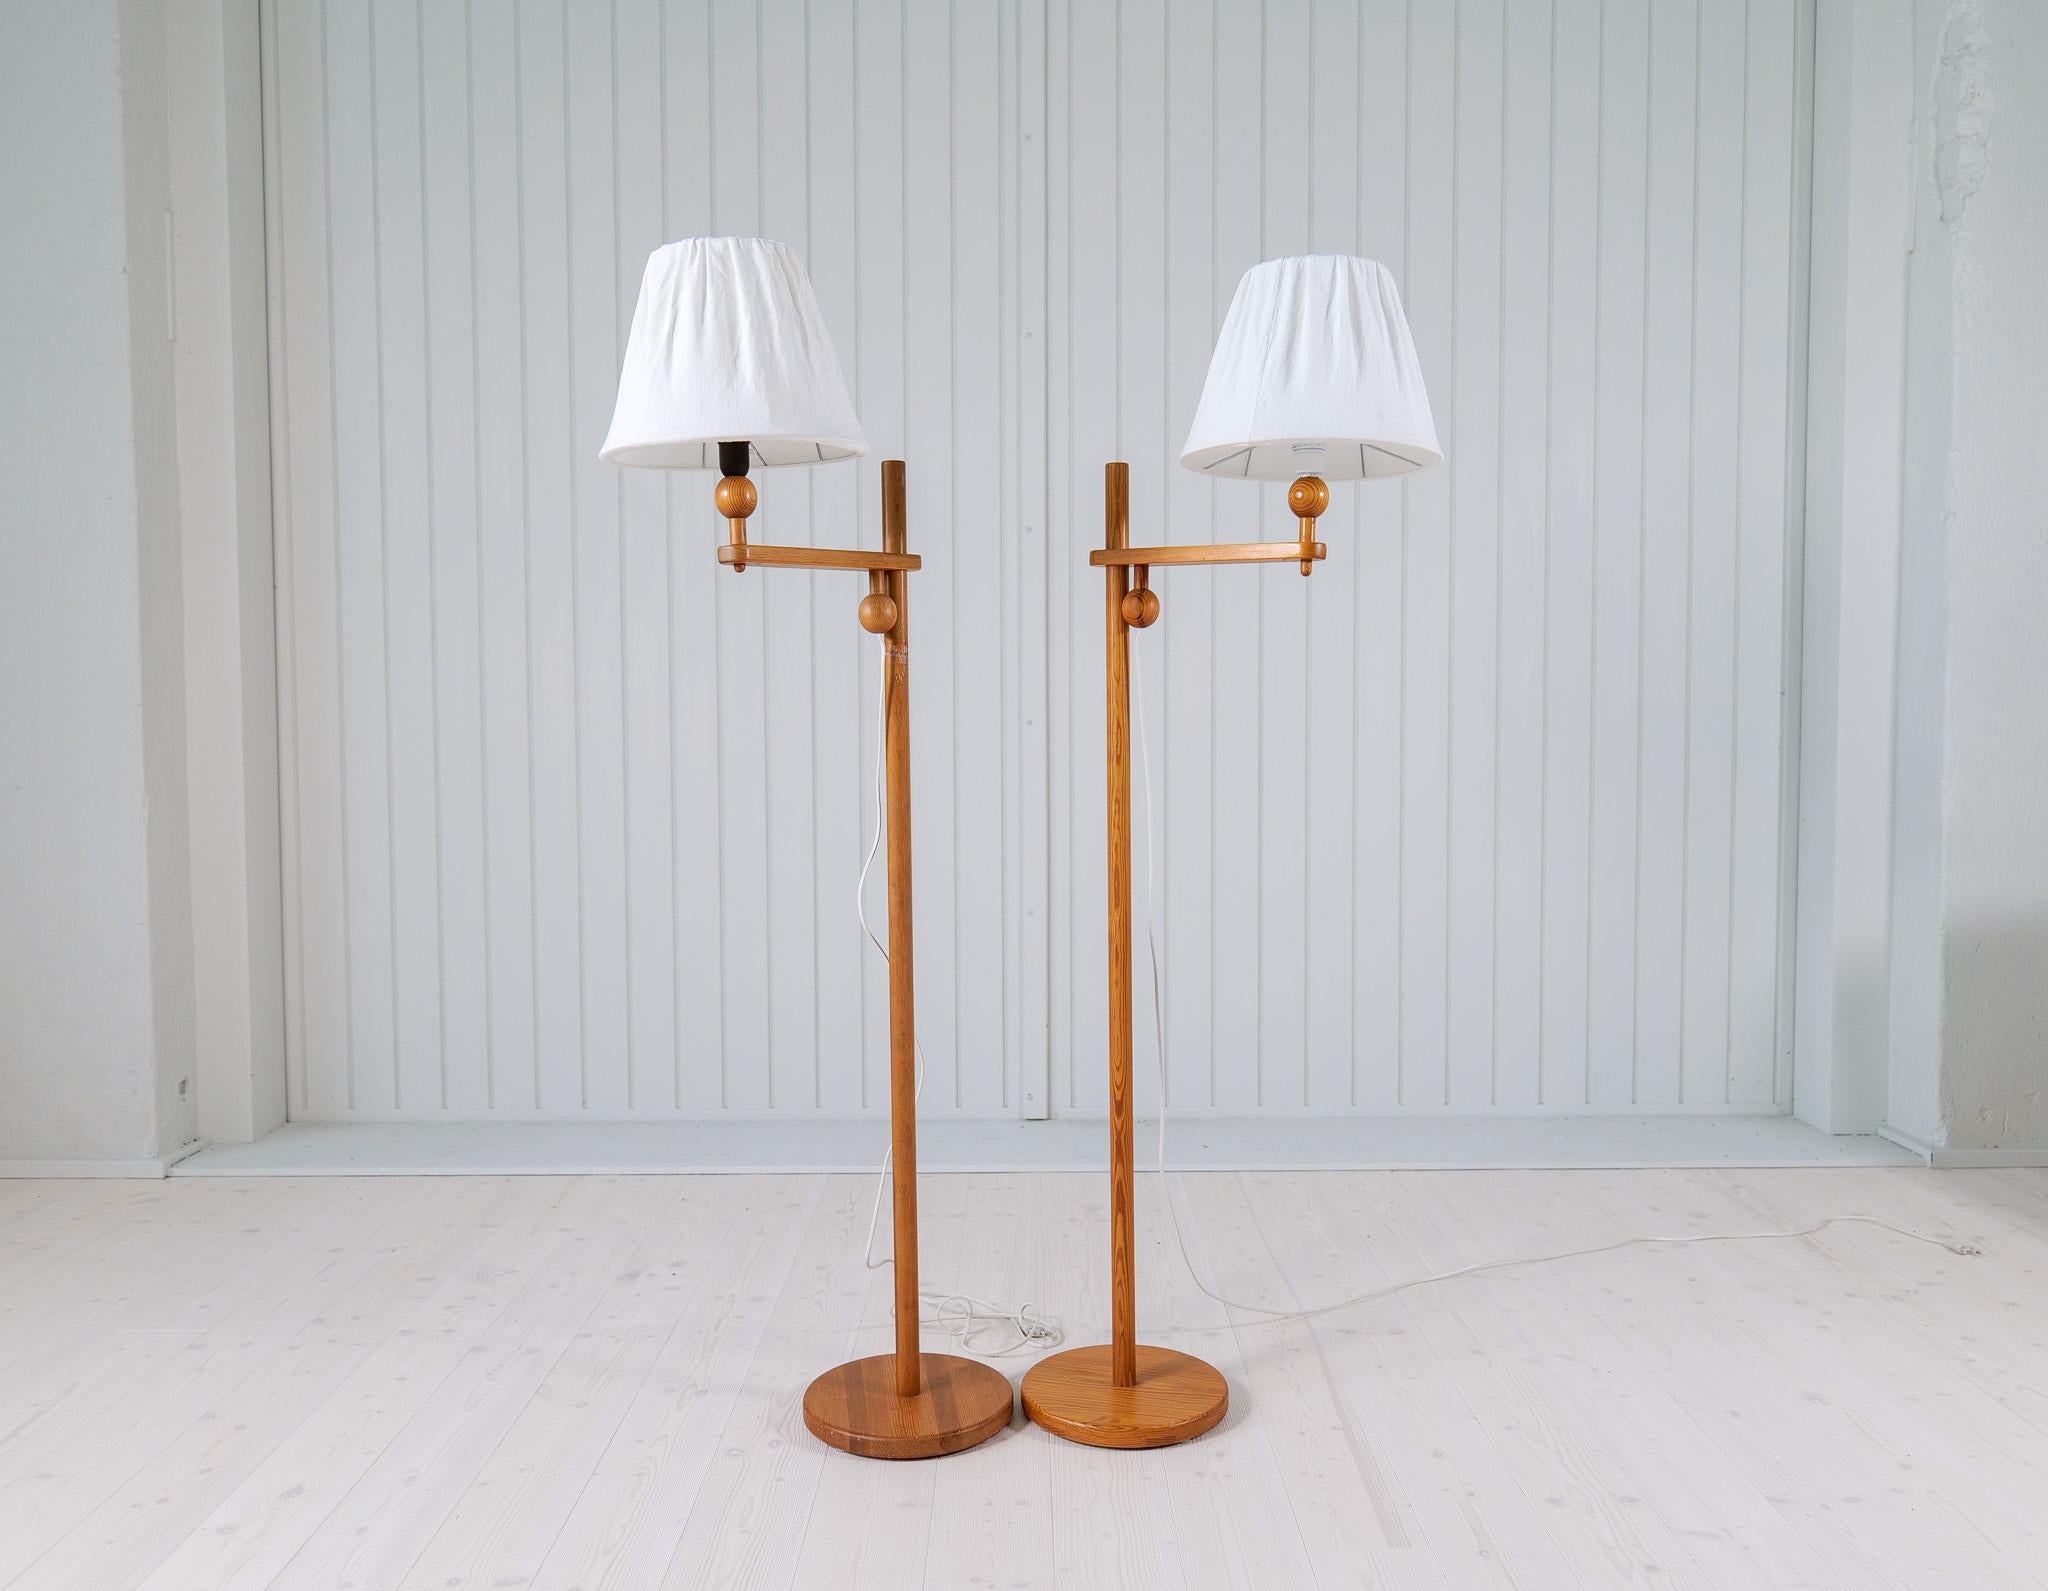 Scandinavian Modern Sculptural Floor Lamps in Pine, Yngve Ekström Sweden 1970s For Sale 1